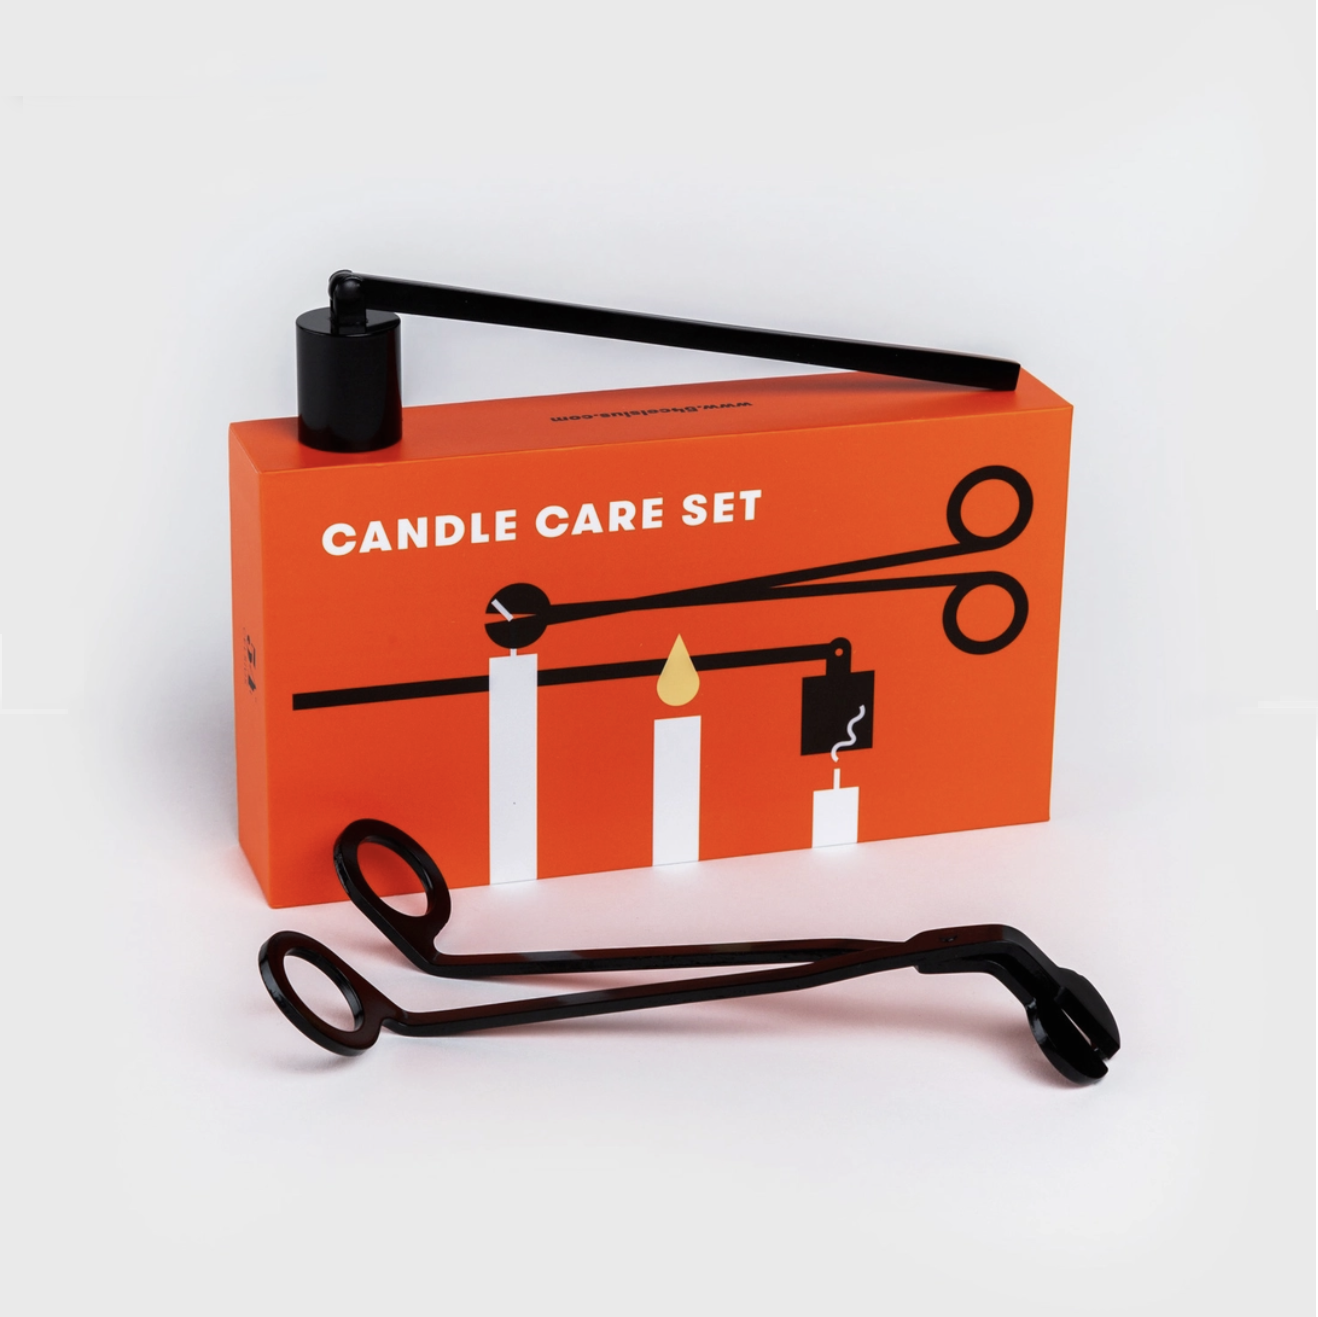 Candle care tools set, candle care set